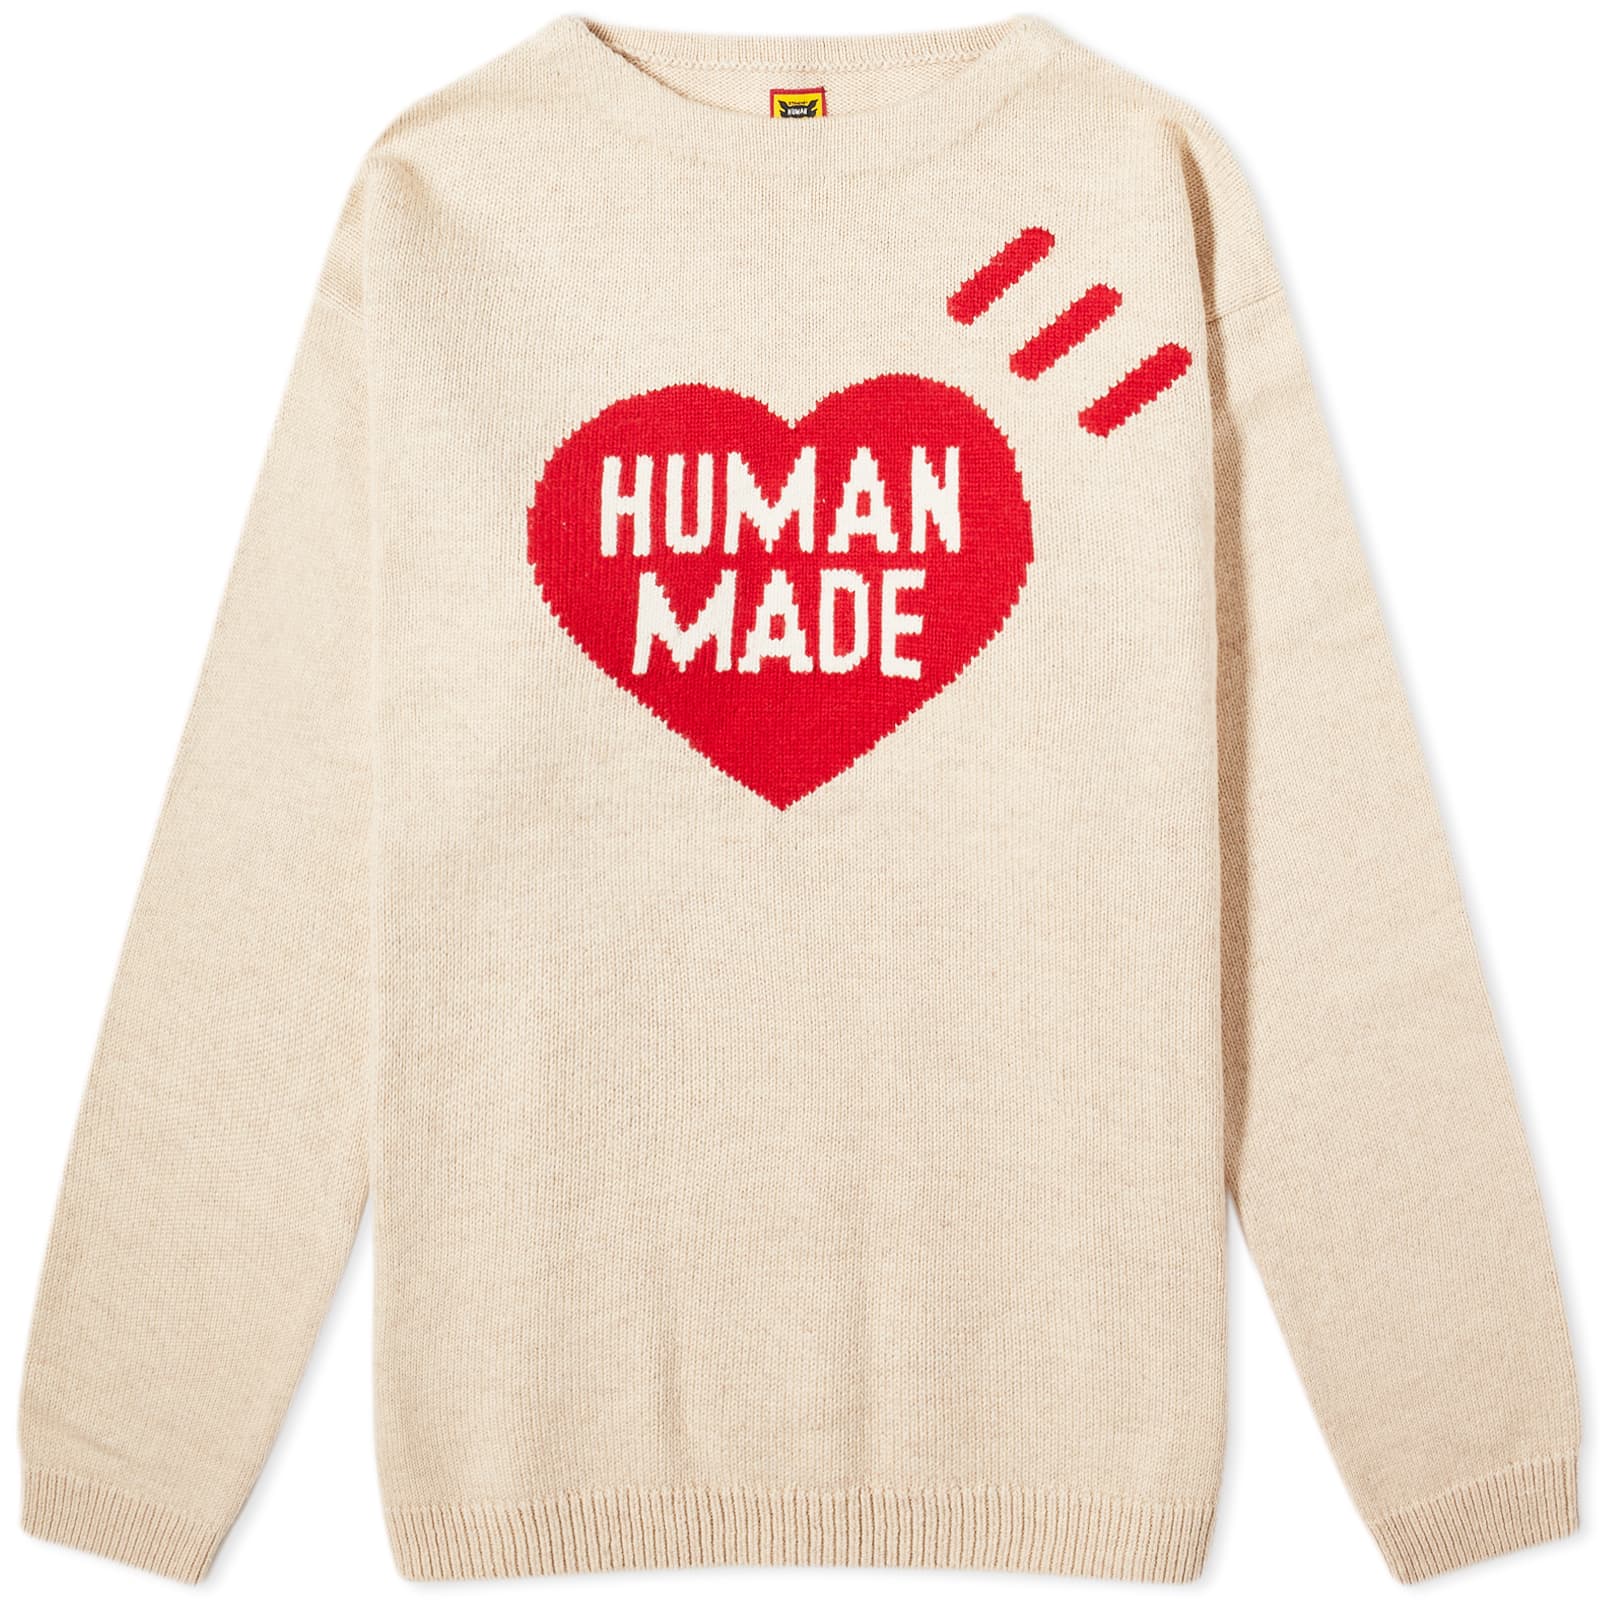 Свитер Human Made Heart Knit, бежевый свитер human made heart knit бежевый